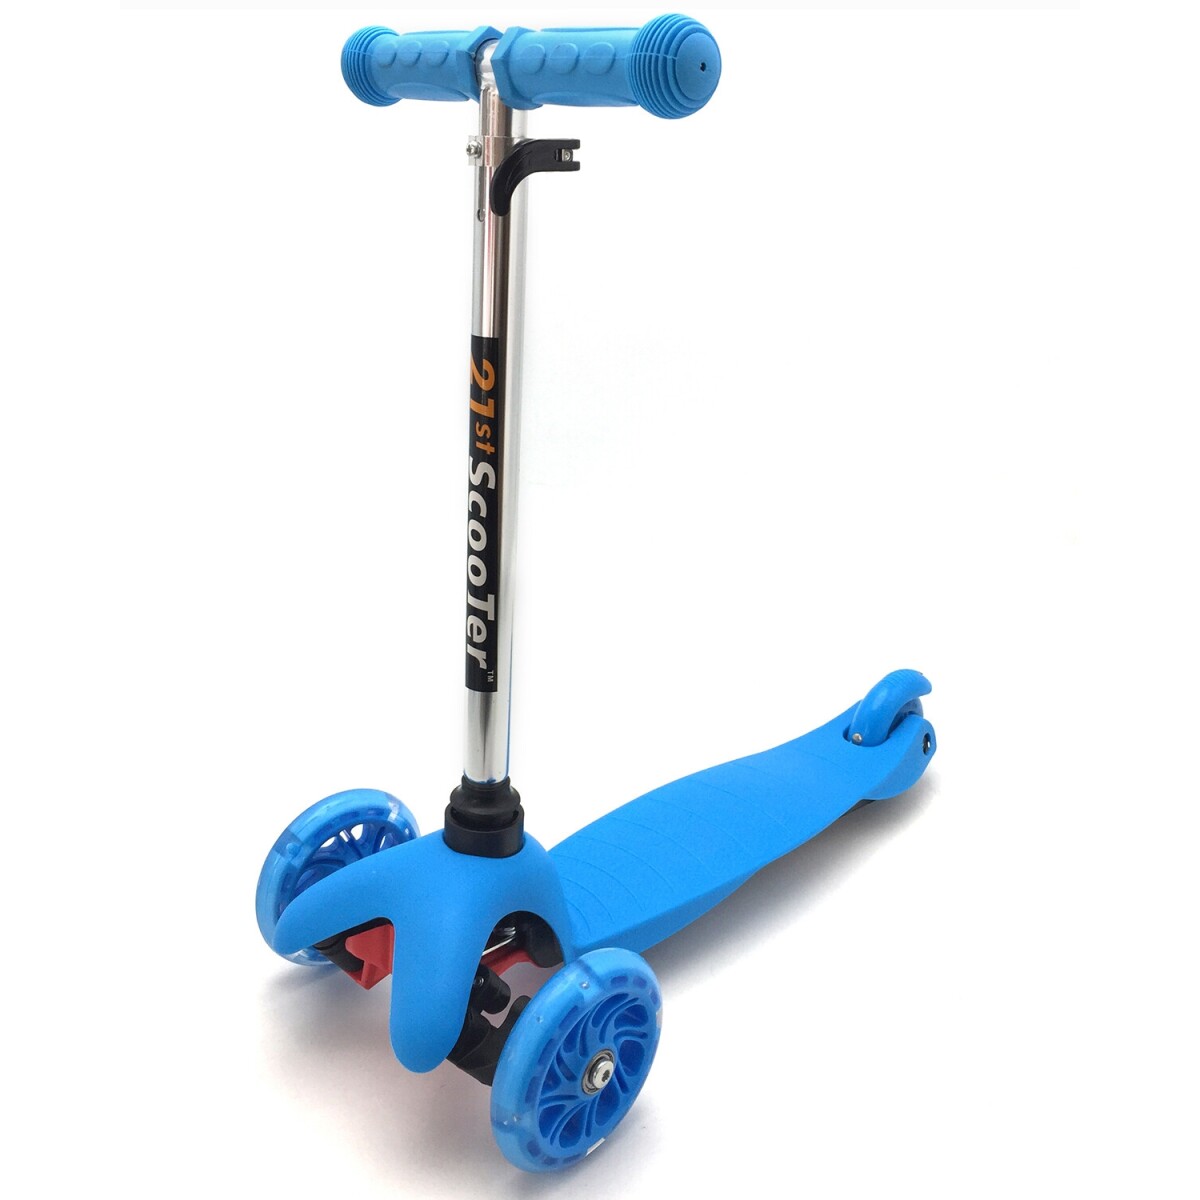 Tripatín tipo monopatín con ruedas luminosas y manillar ajustable - Azul 